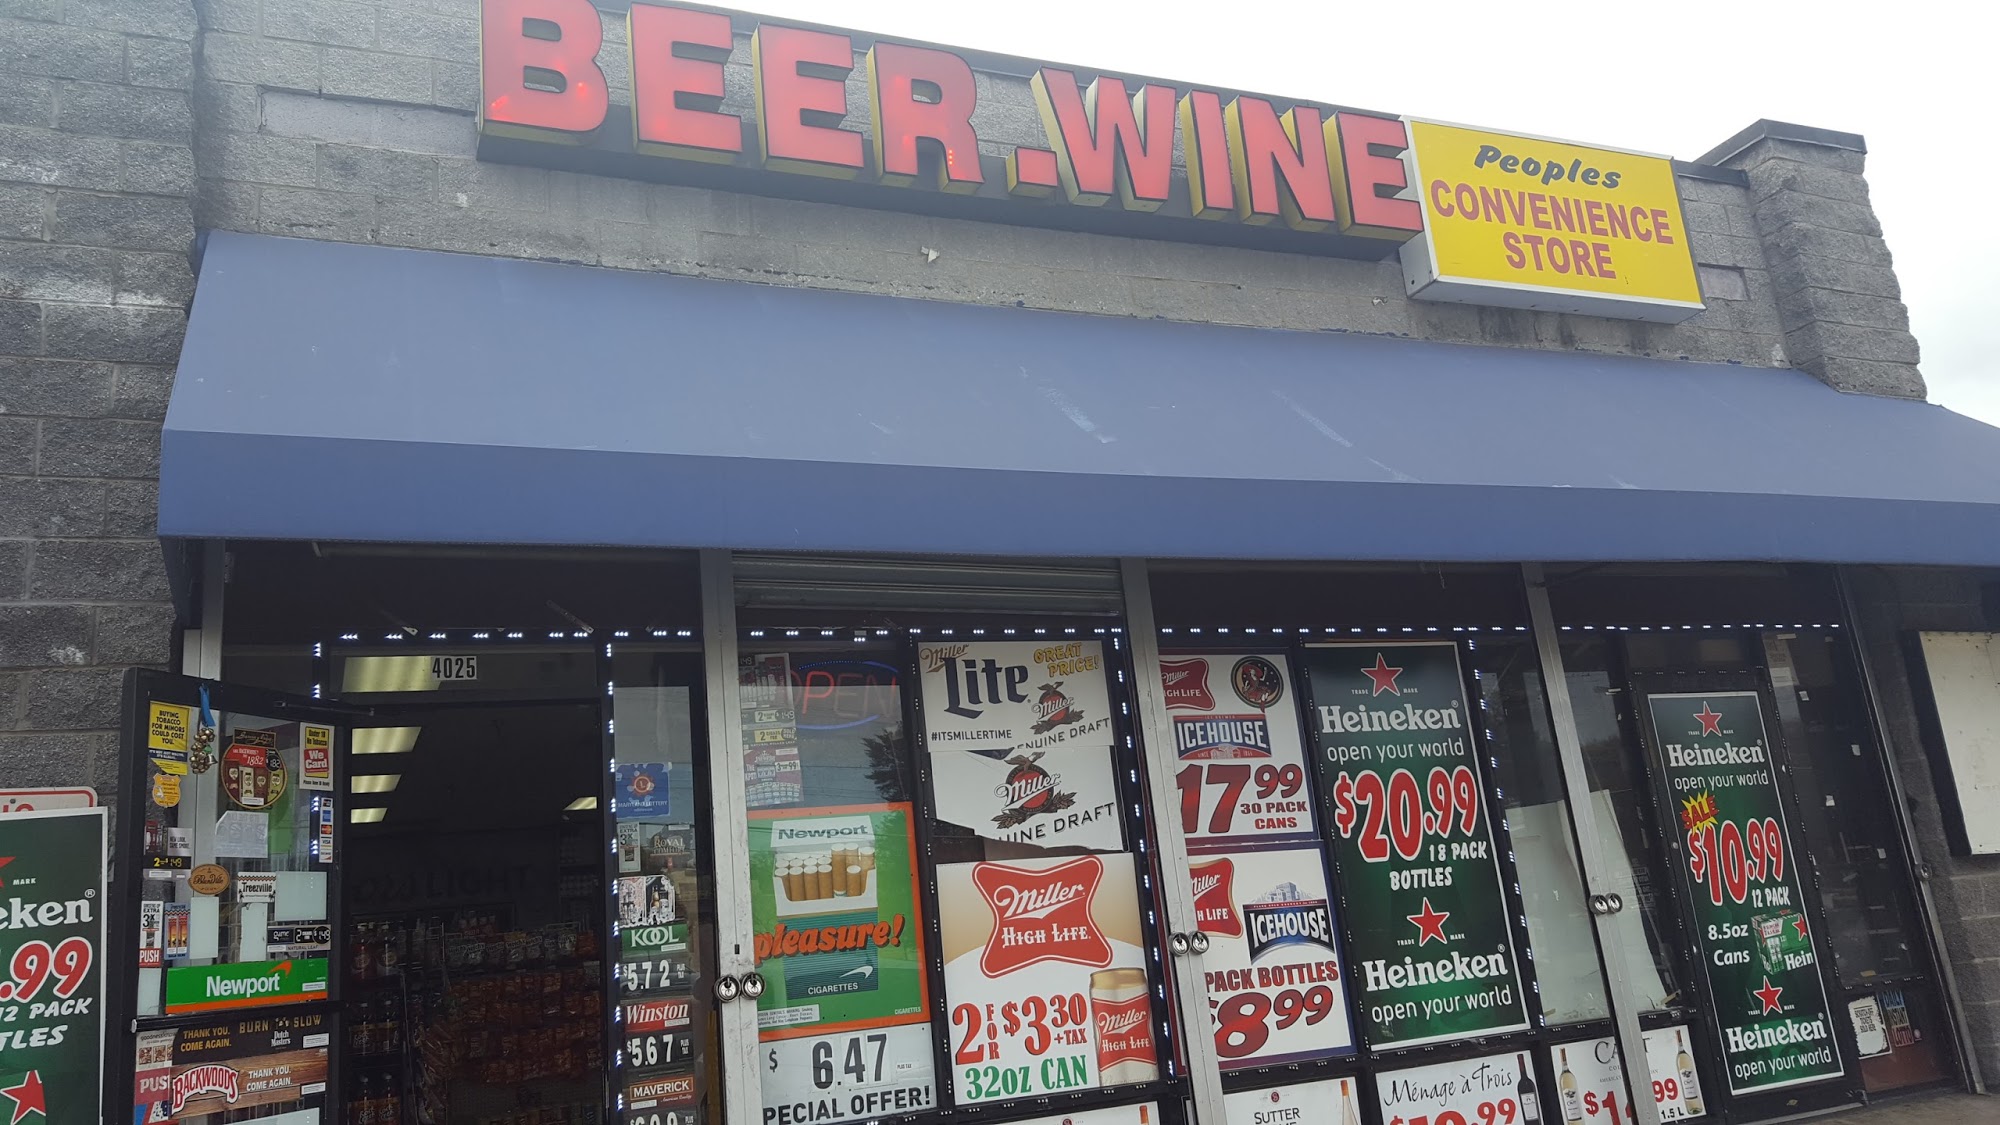 People's Convenience Beer & Wine